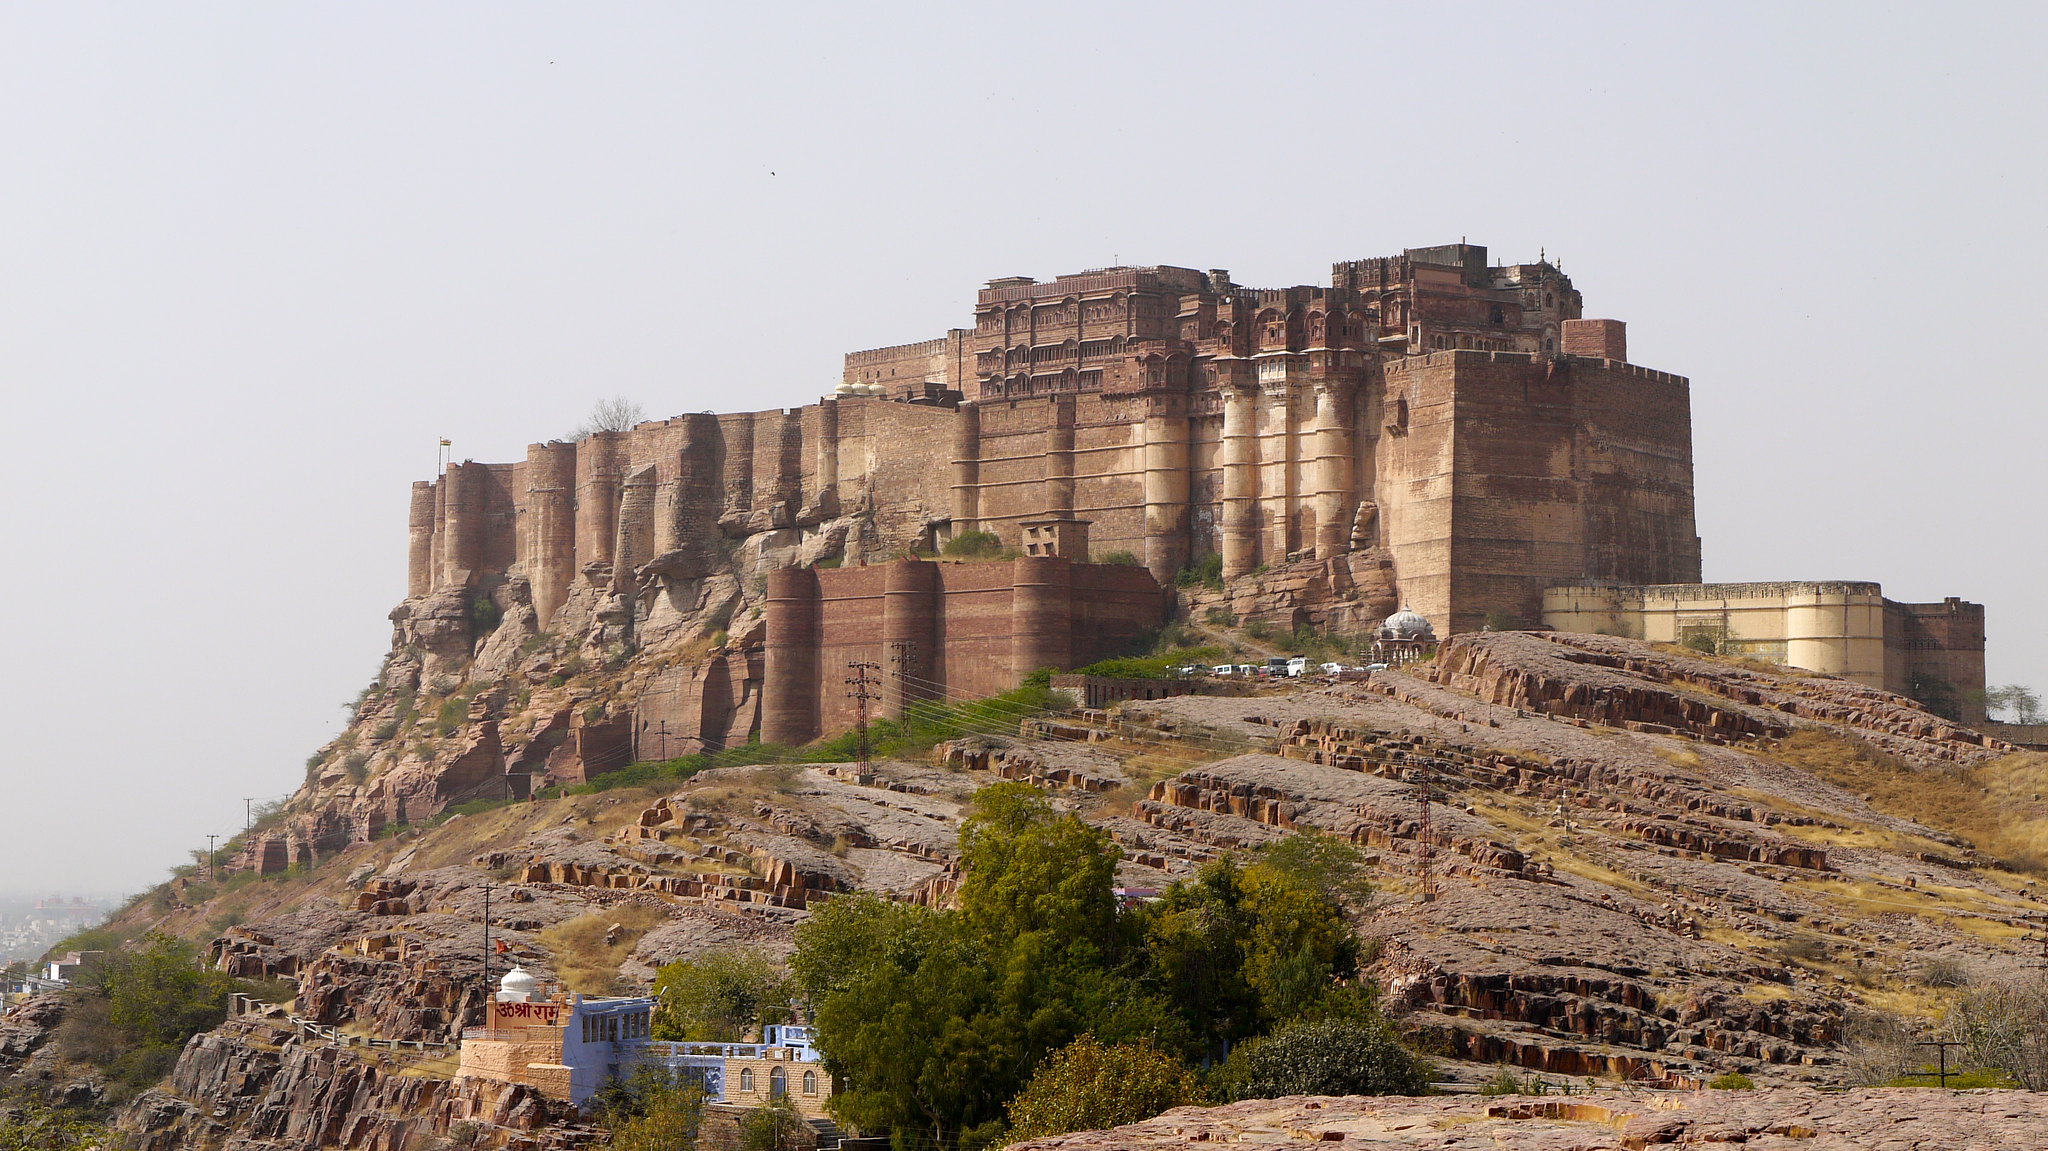 The very impressive Mehrangarh Fort